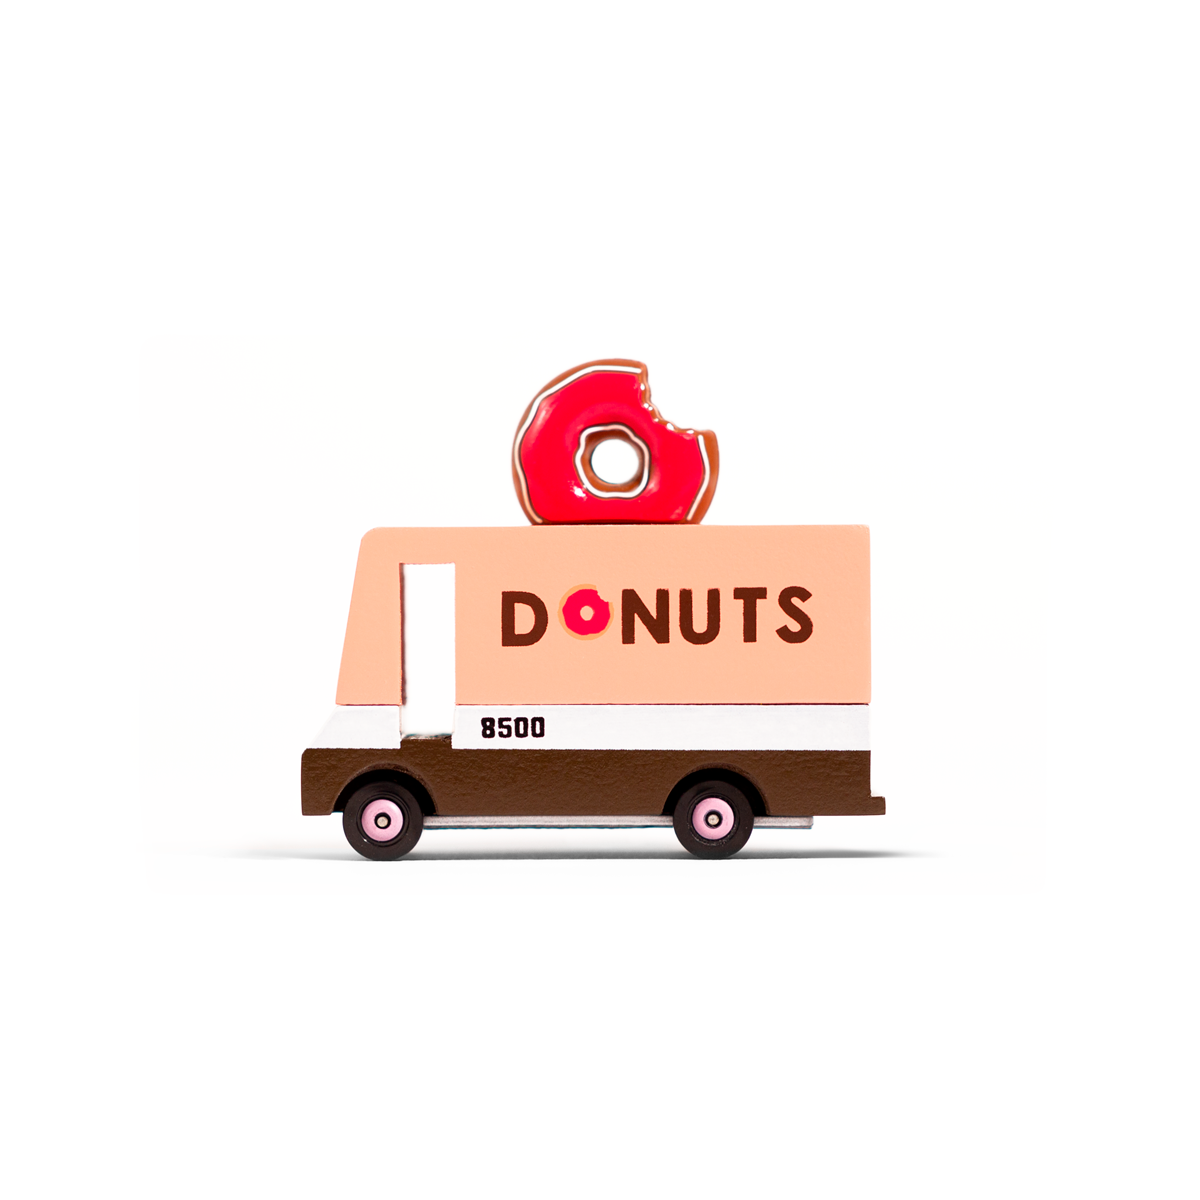 Candyvans Donut Truck 